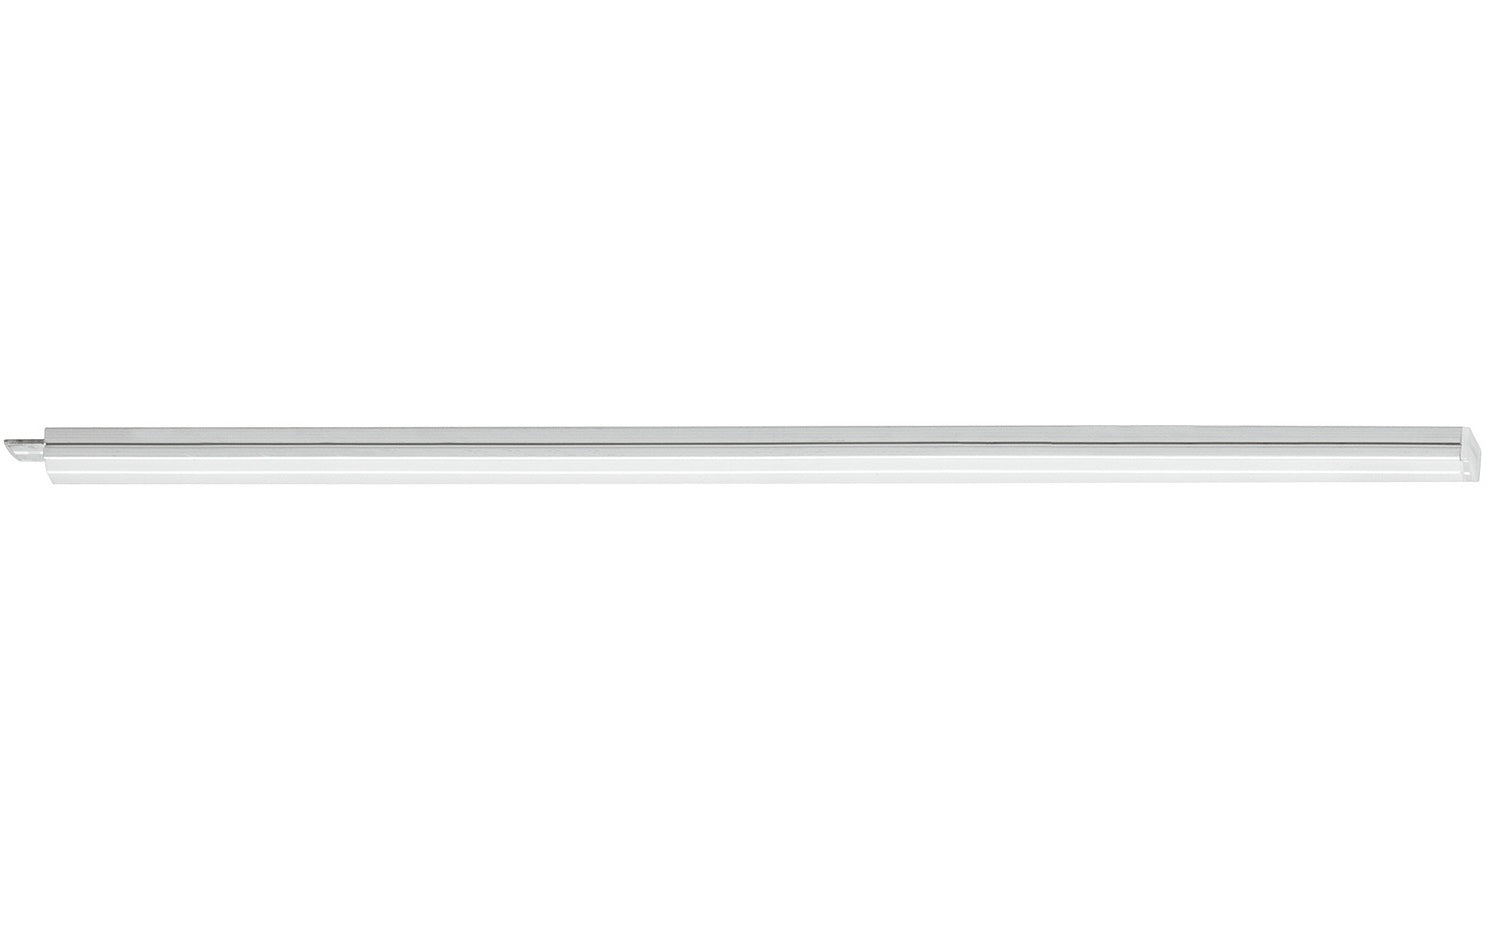 Hafele Loox 2024 12V Plug-In LED Strip Light